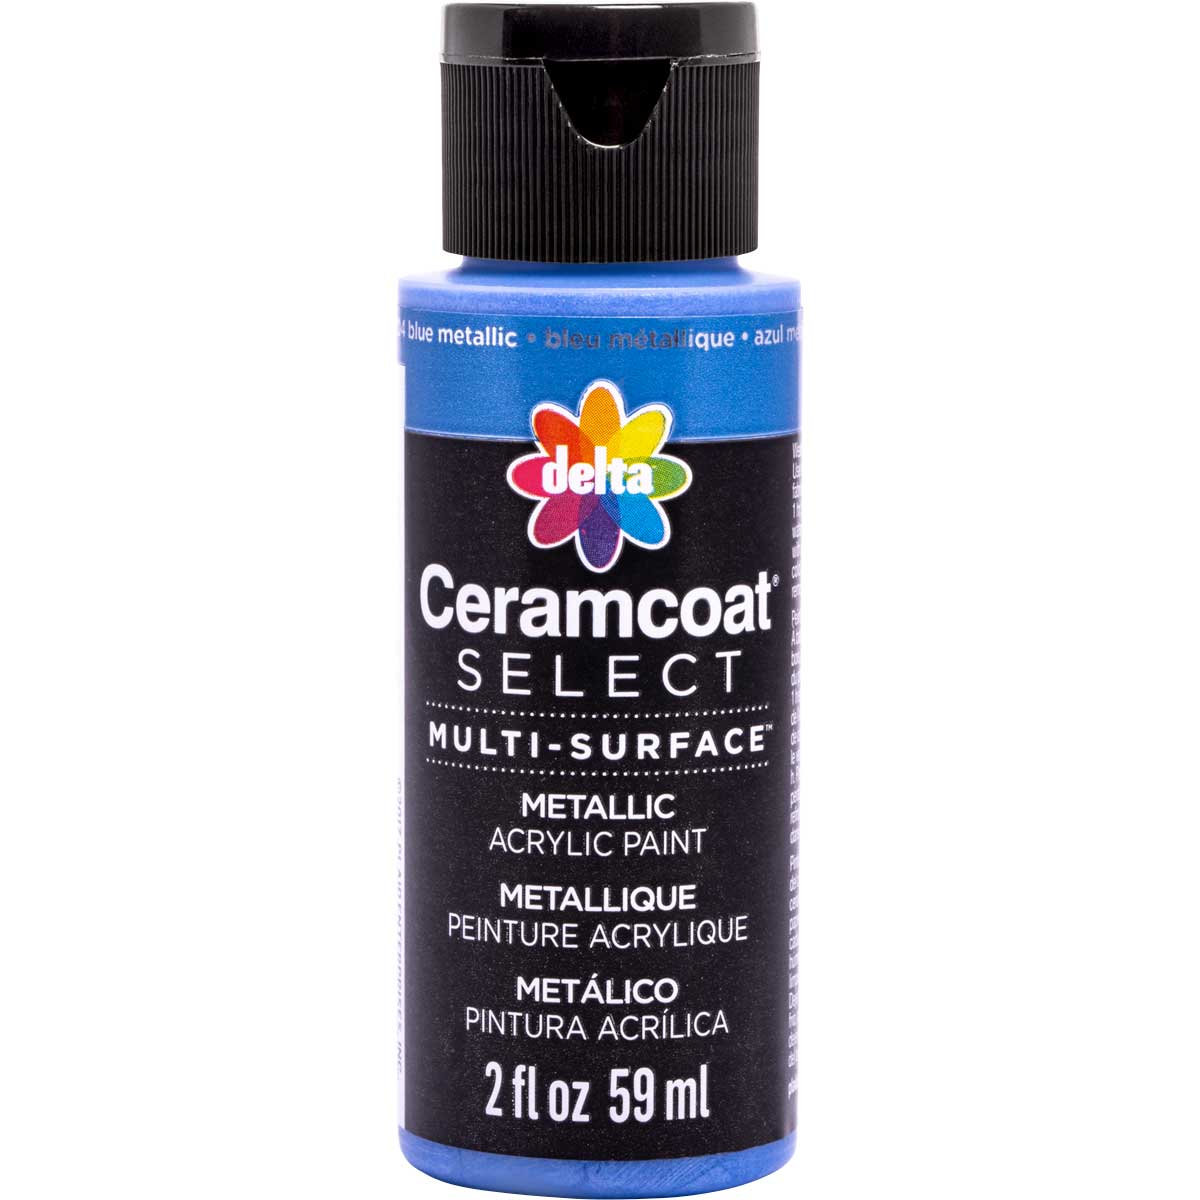 Delta Ceramcoat ® Select Multi-Surface Acrylic Paint - Metallic - Blue, 2 oz. - 04104